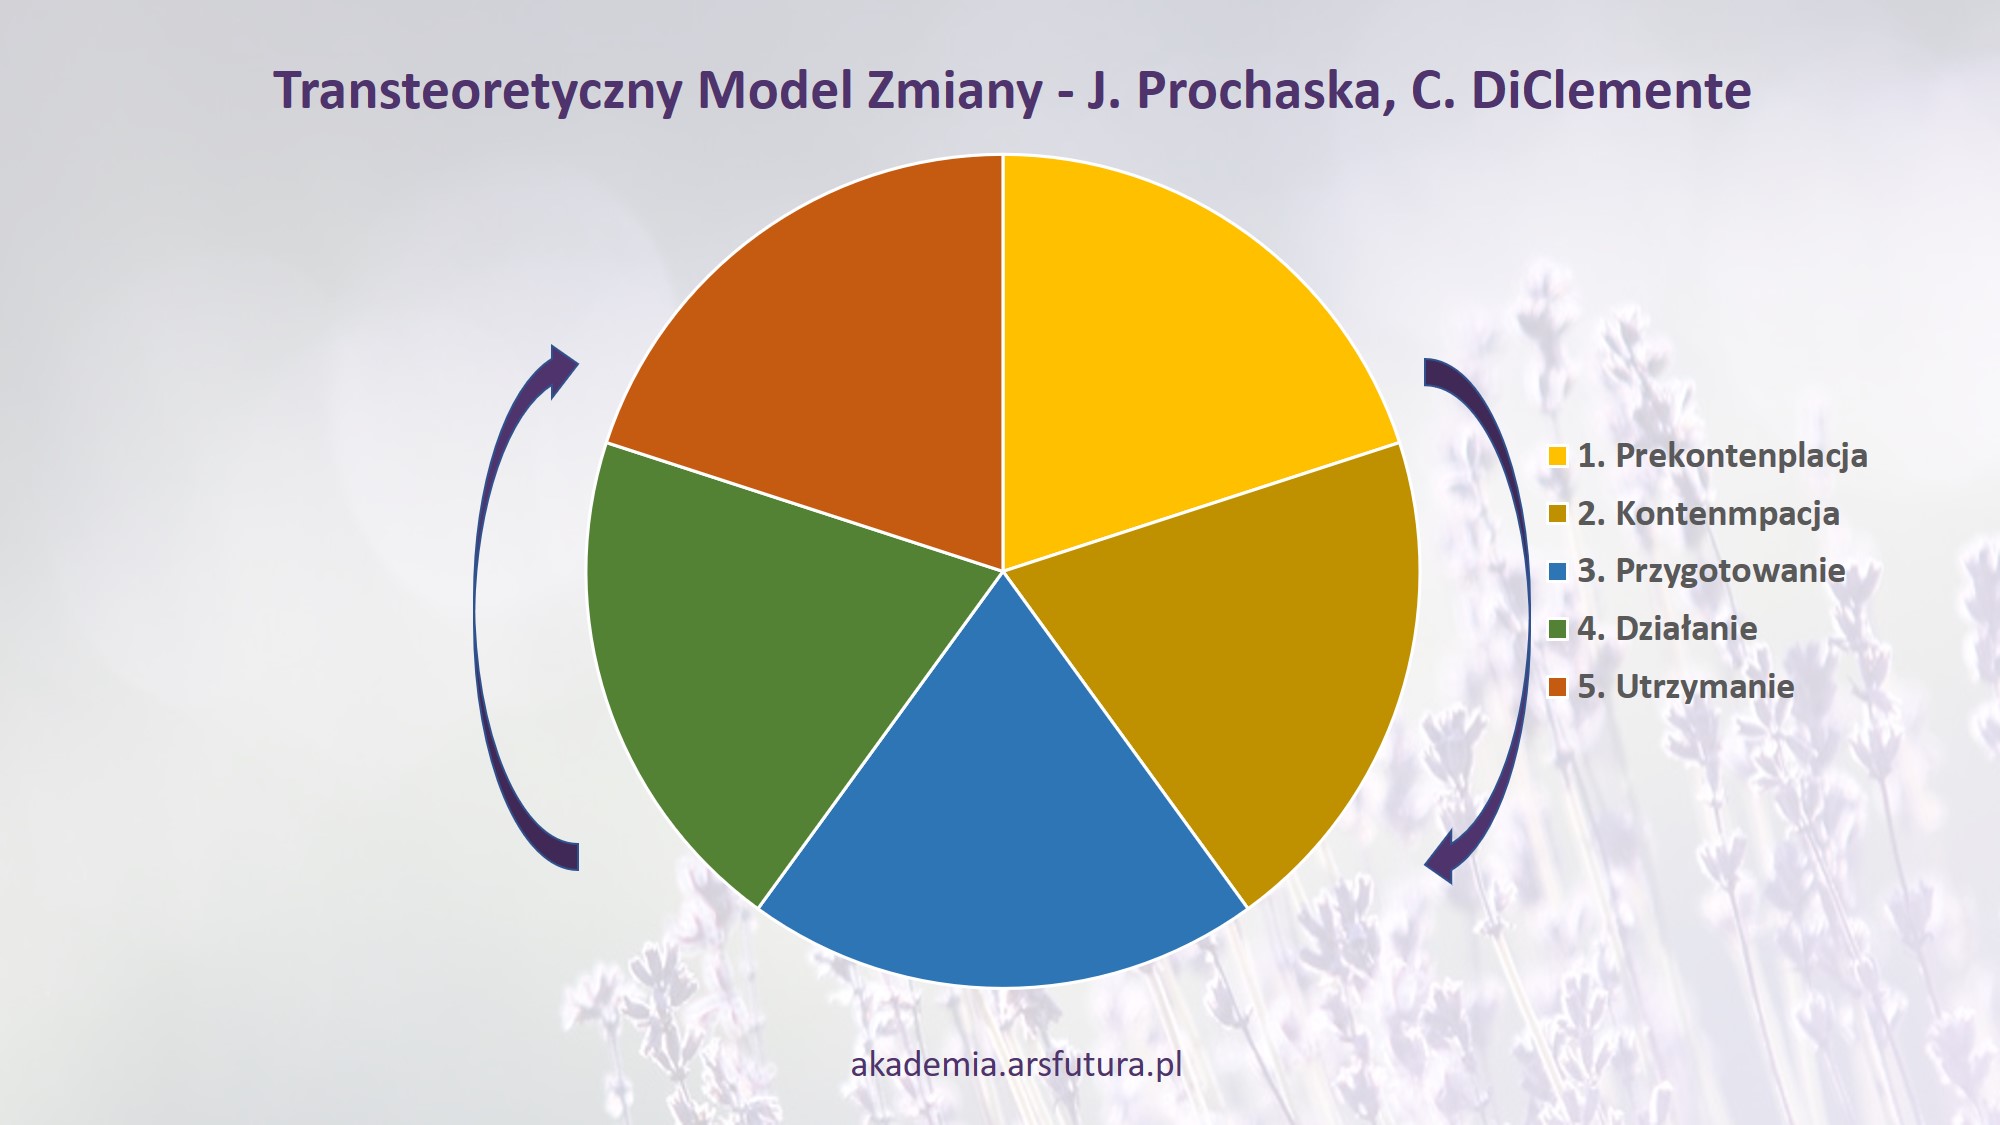 Transteoretyczny Model Zmiany - coaching akademia.arsfutura.pl